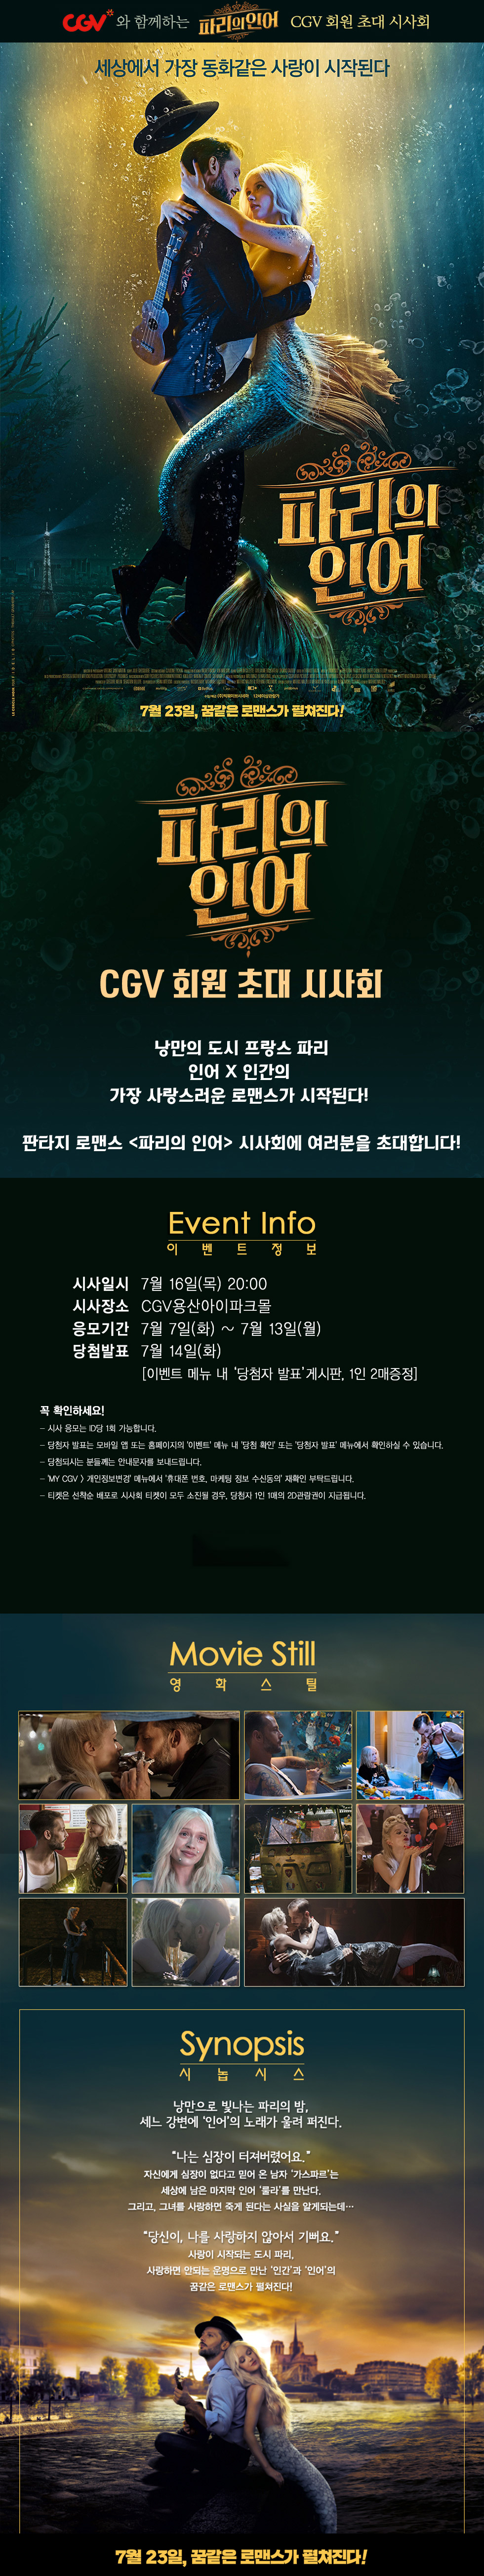 bg_event.jpg